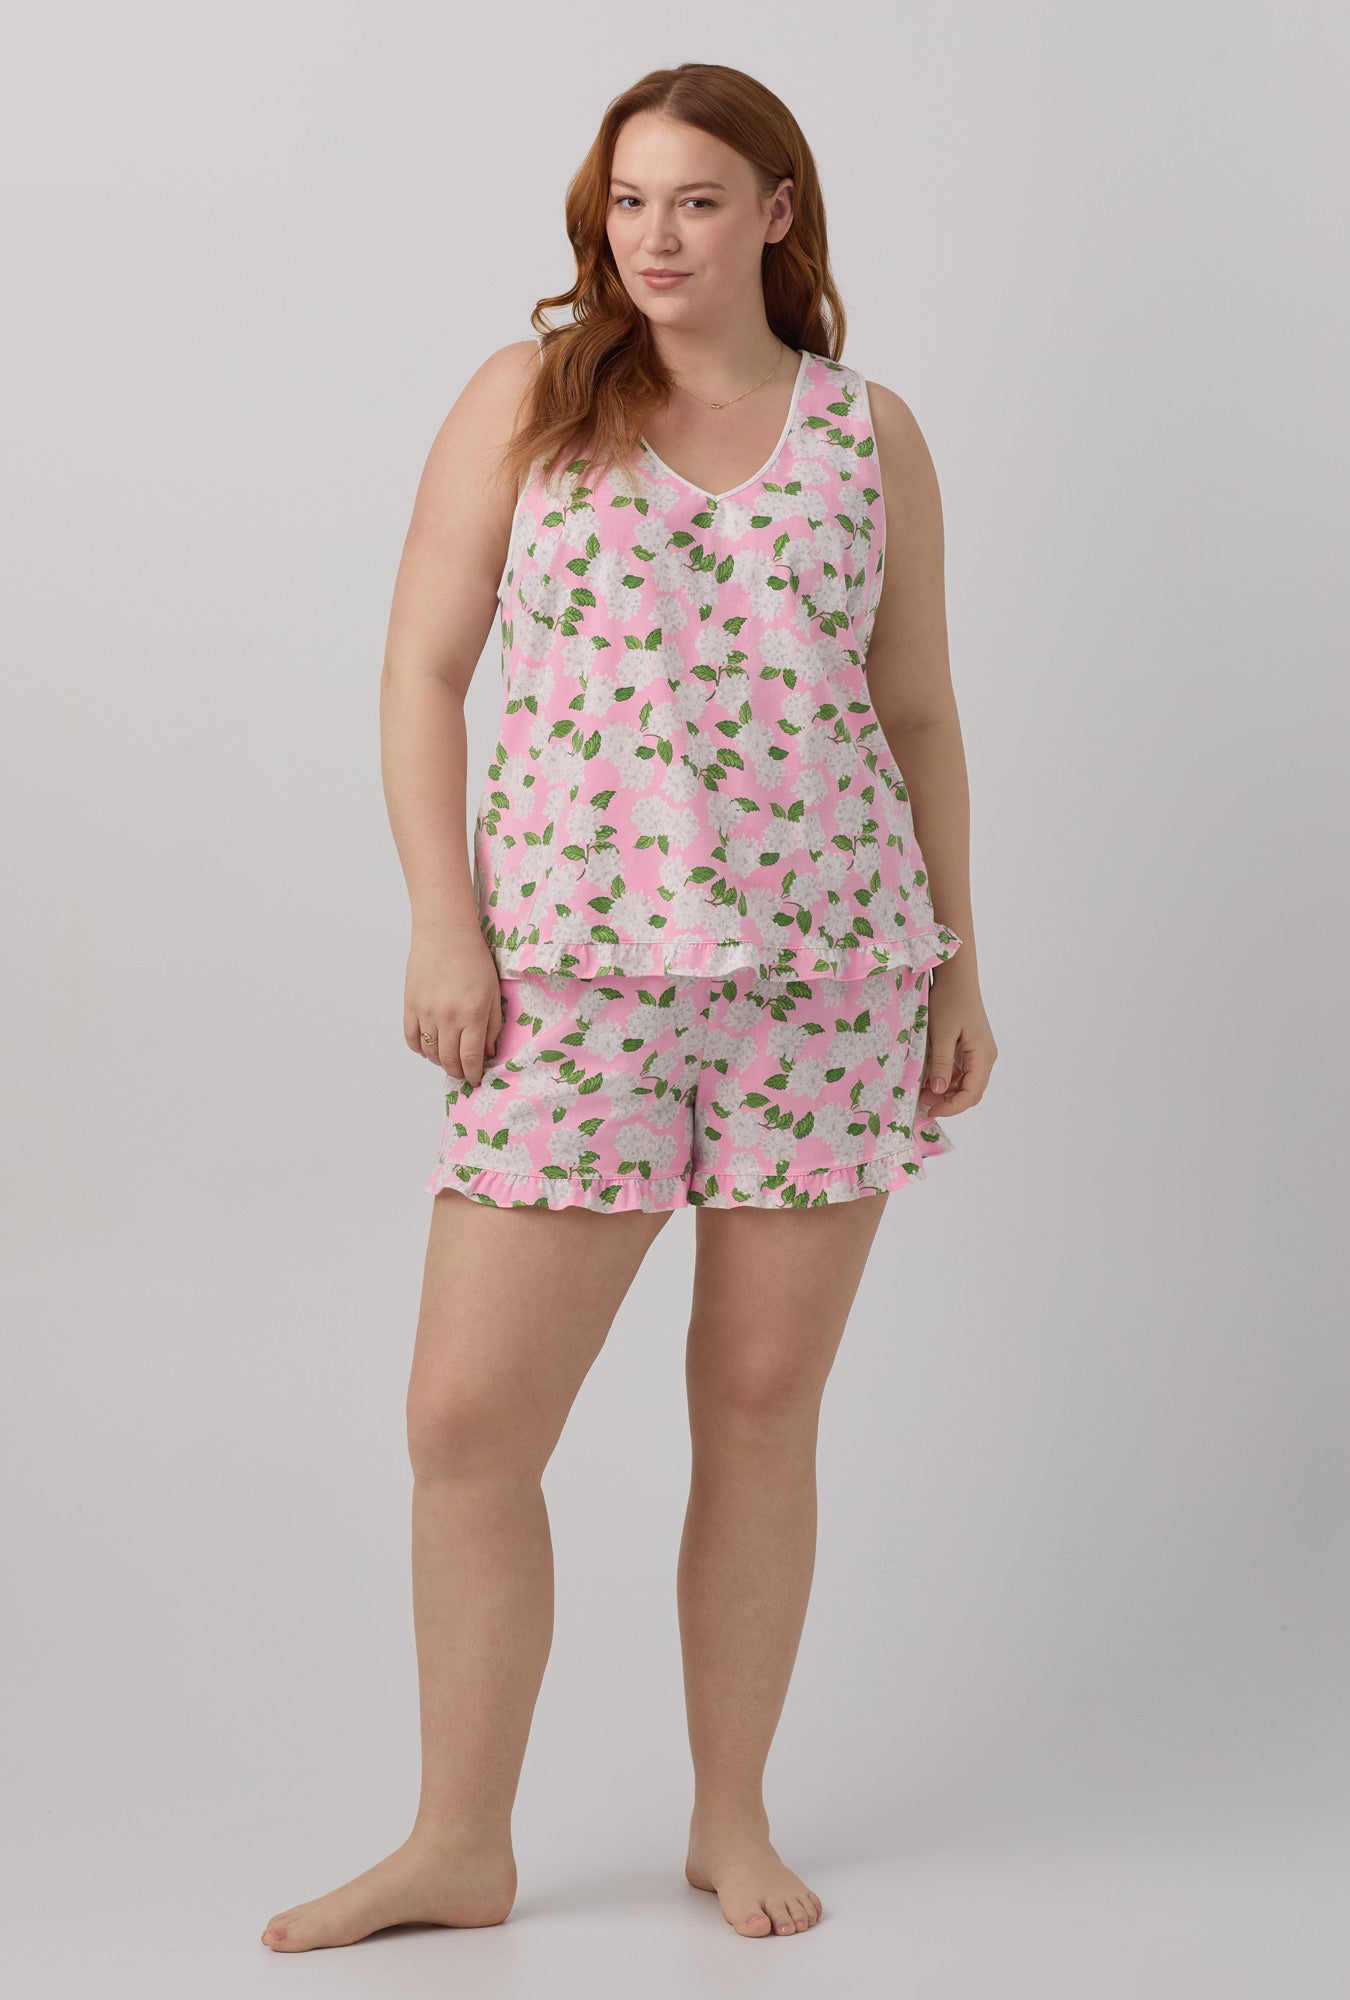 A lady wearing pink Ruffle Tank Shorty Stretch Jersey PJ Set with Pink Summer Hydrangea print.